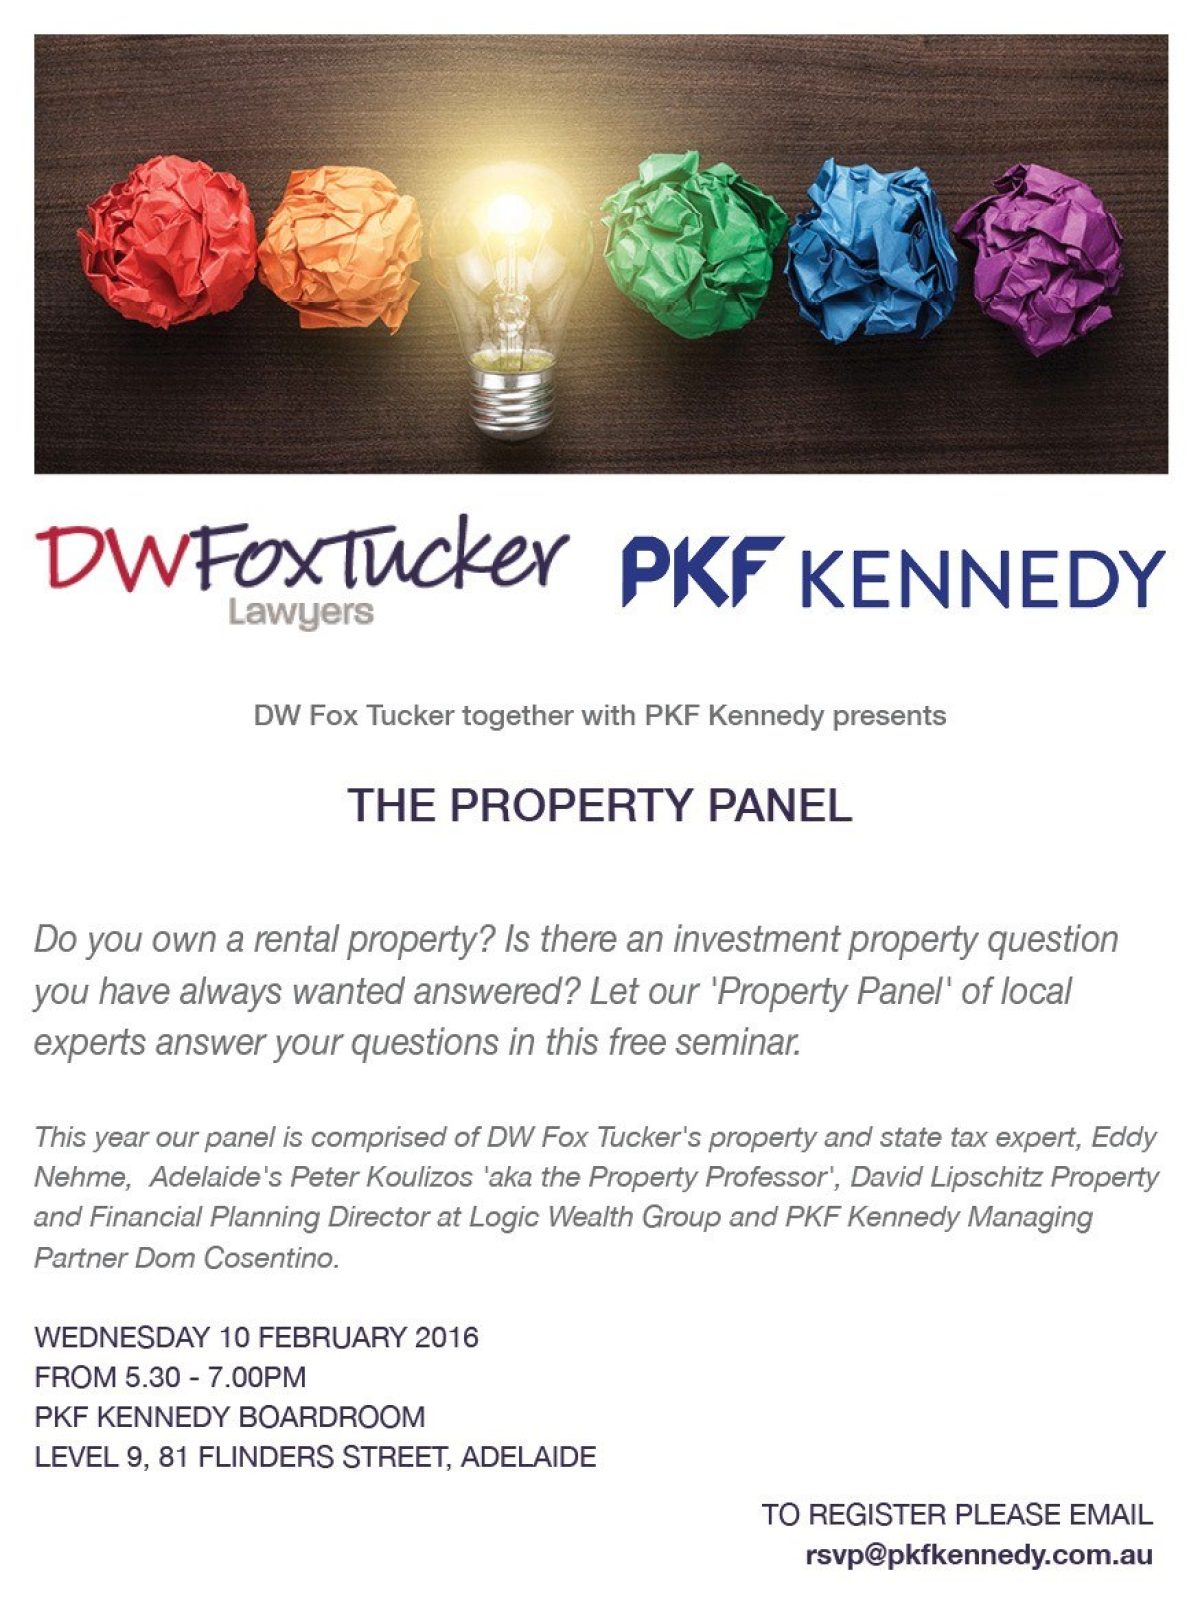 DW Fox Tucker PKF Kennedy Property Panel 10 Feb 2016